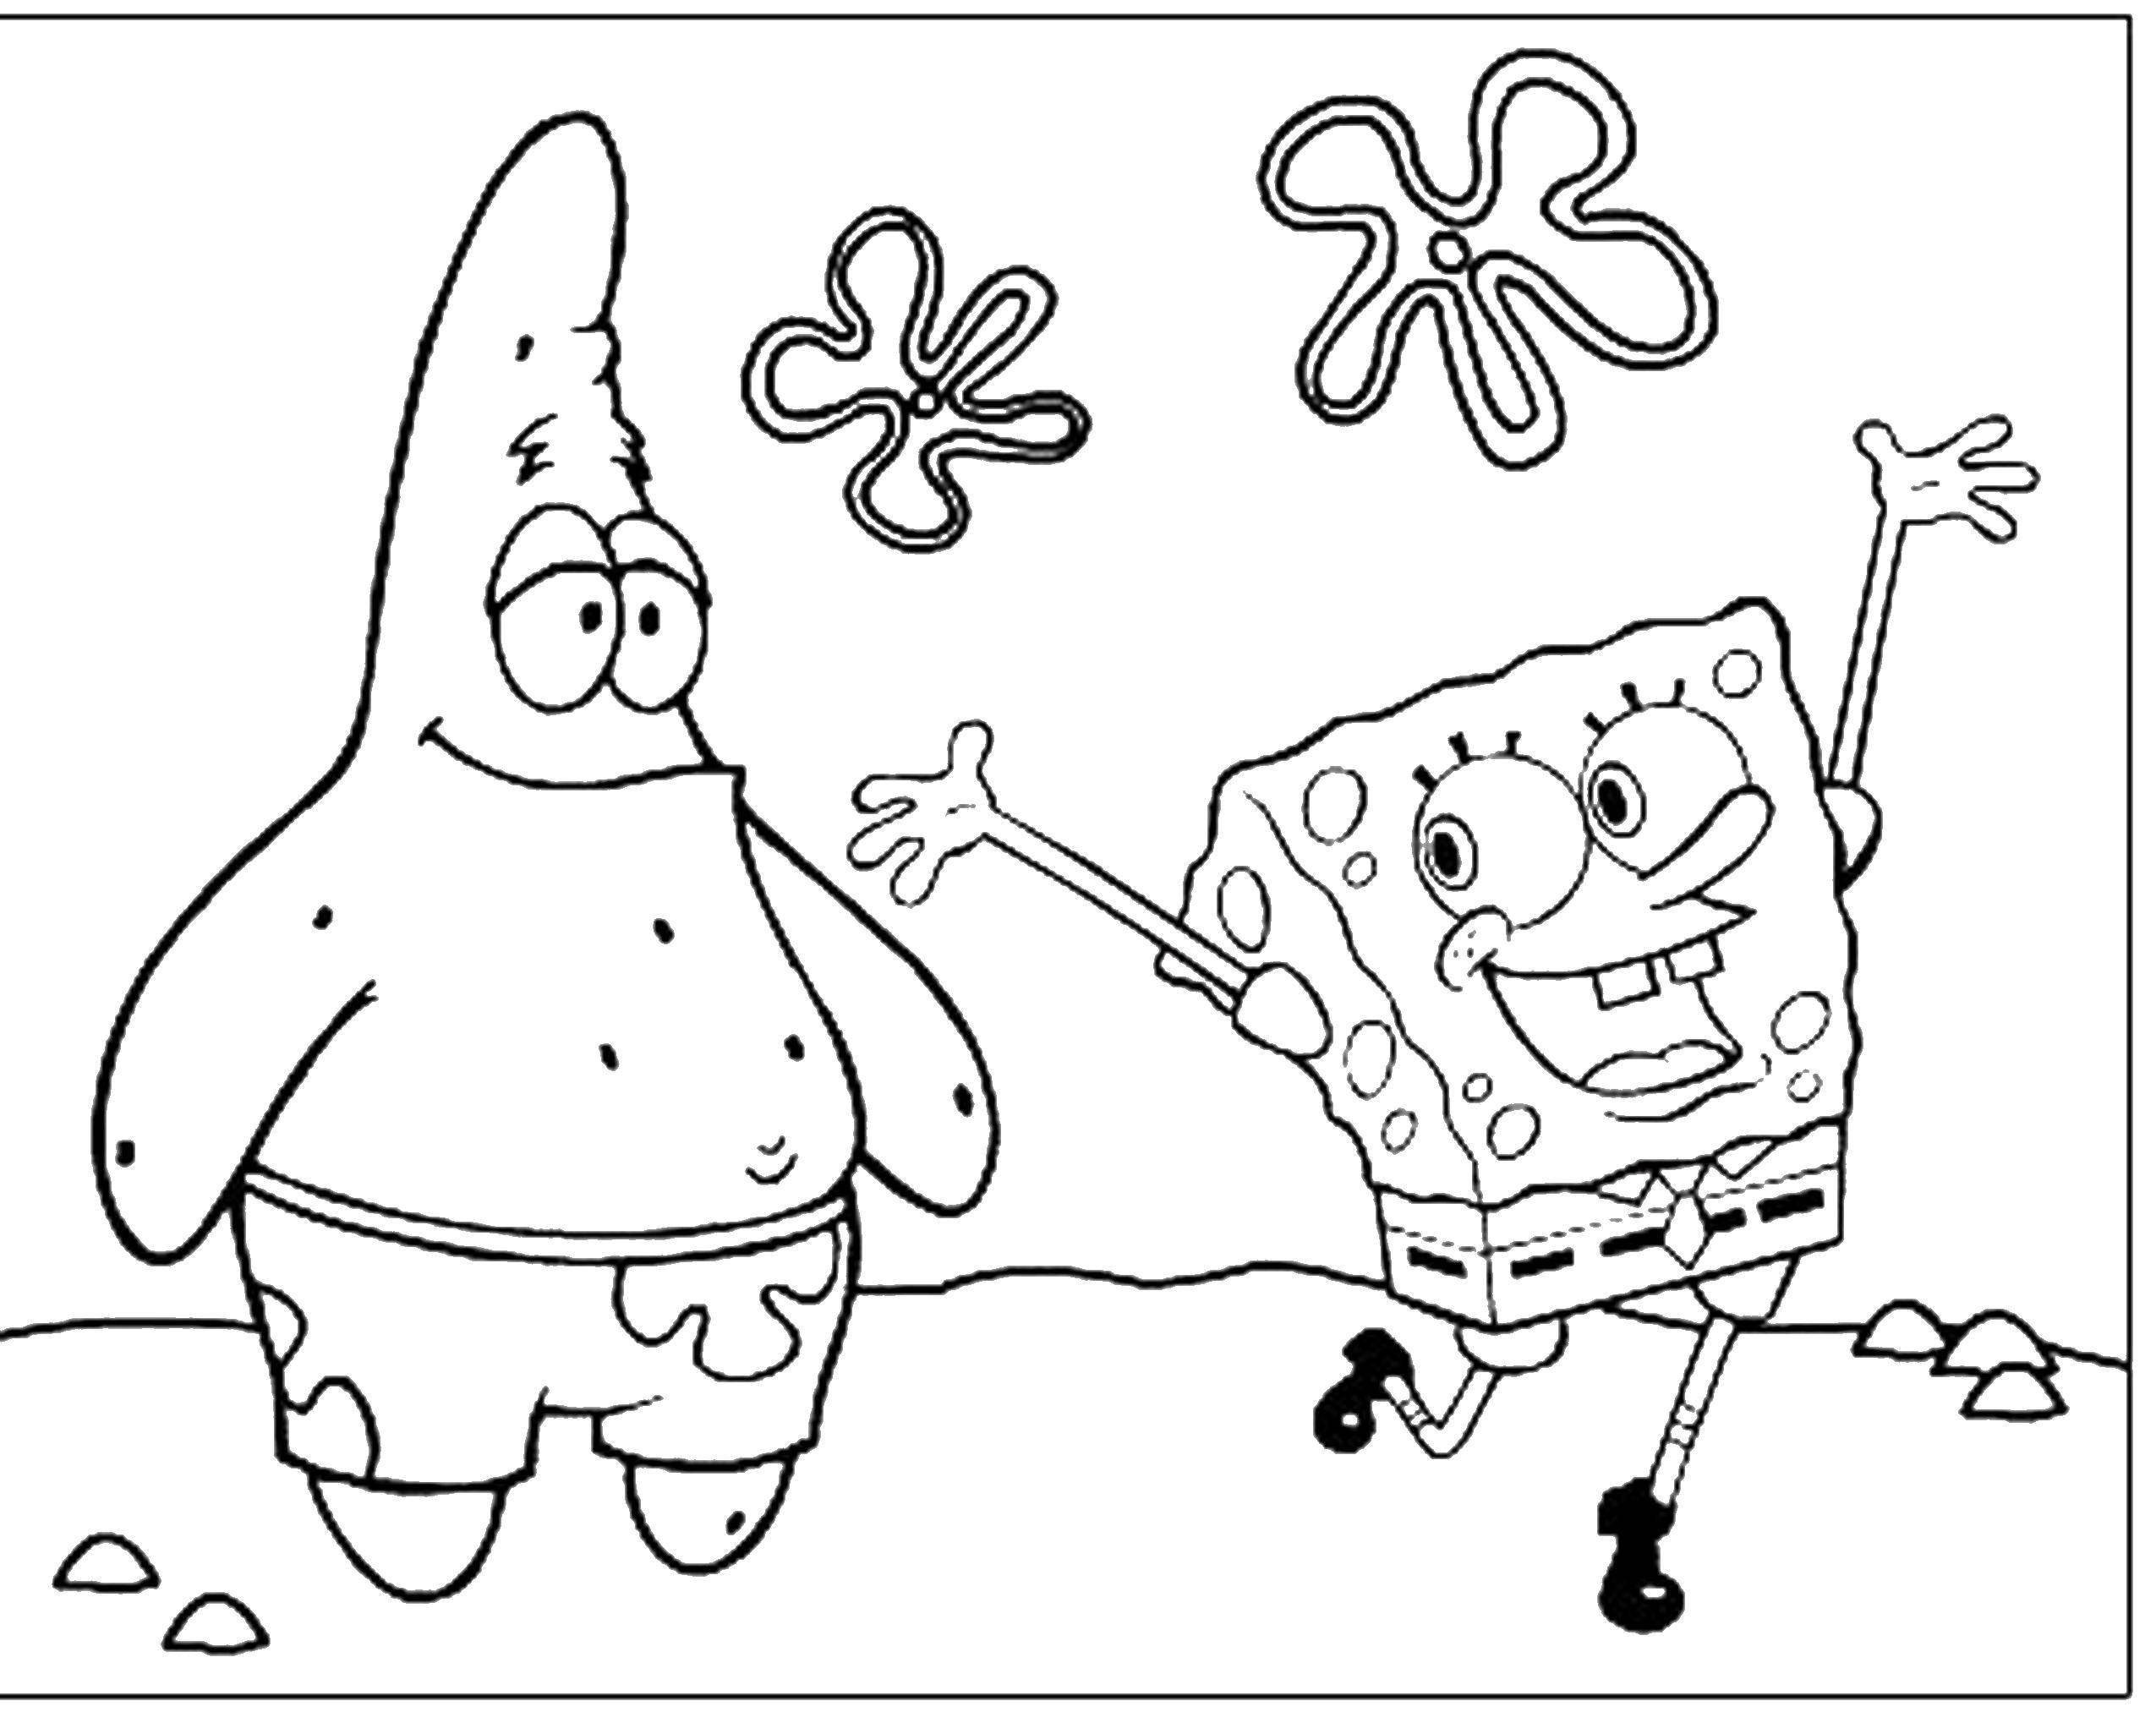 Coloring Spongebob and Patrick. Category Spongebob. Tags:  cartoon, Patrick, spongebob.